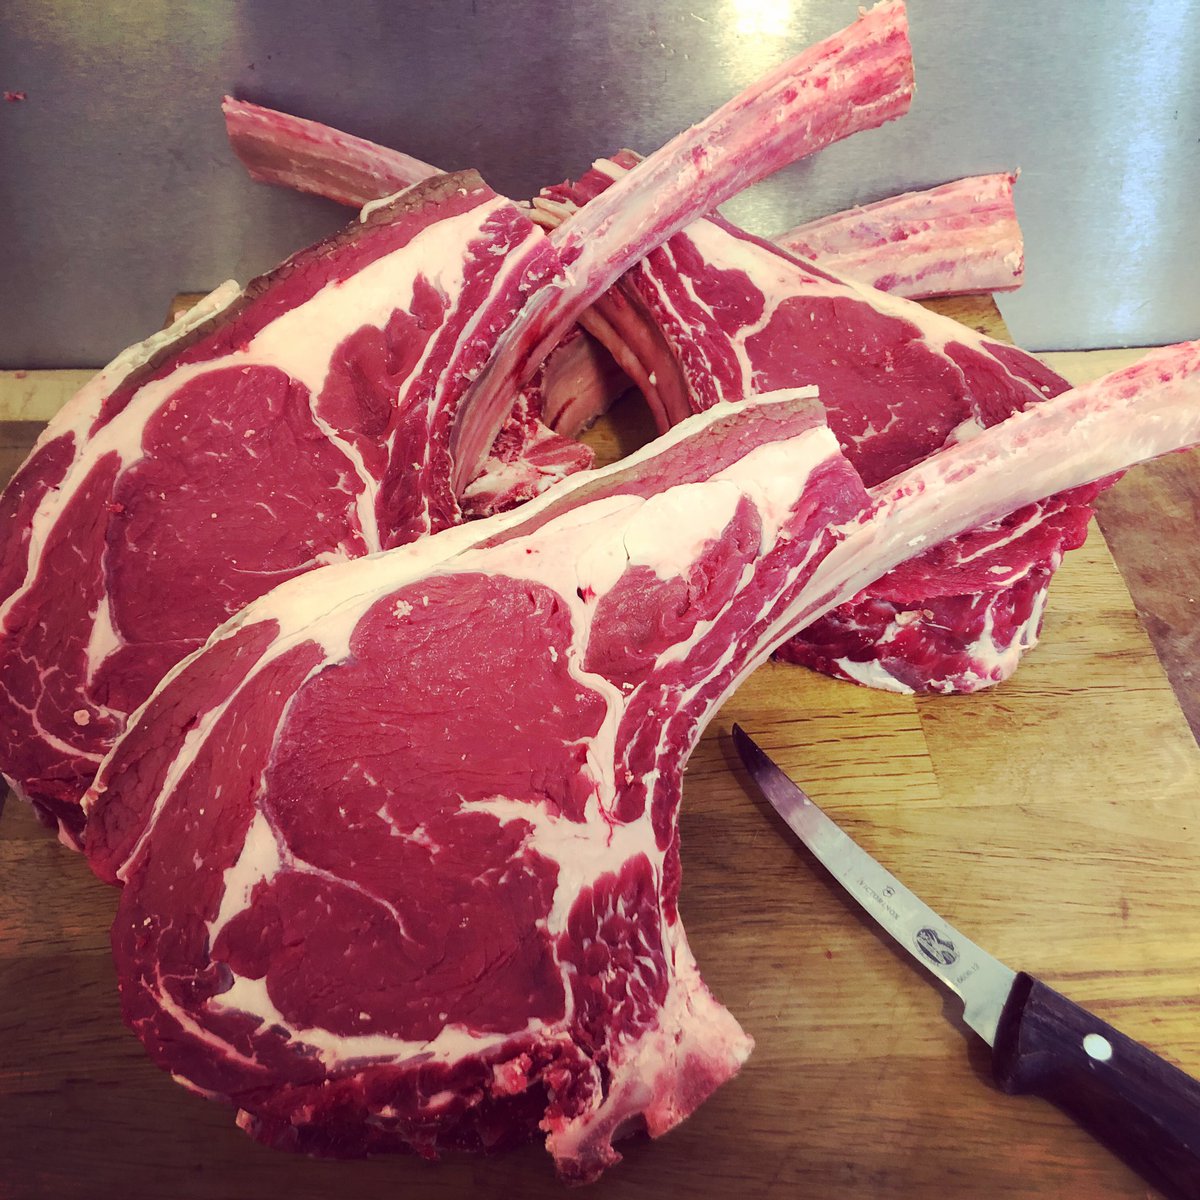 Beef tomahawks #perfectforvalentines #steak #valentines #treatyourlovedone #sharingplatter